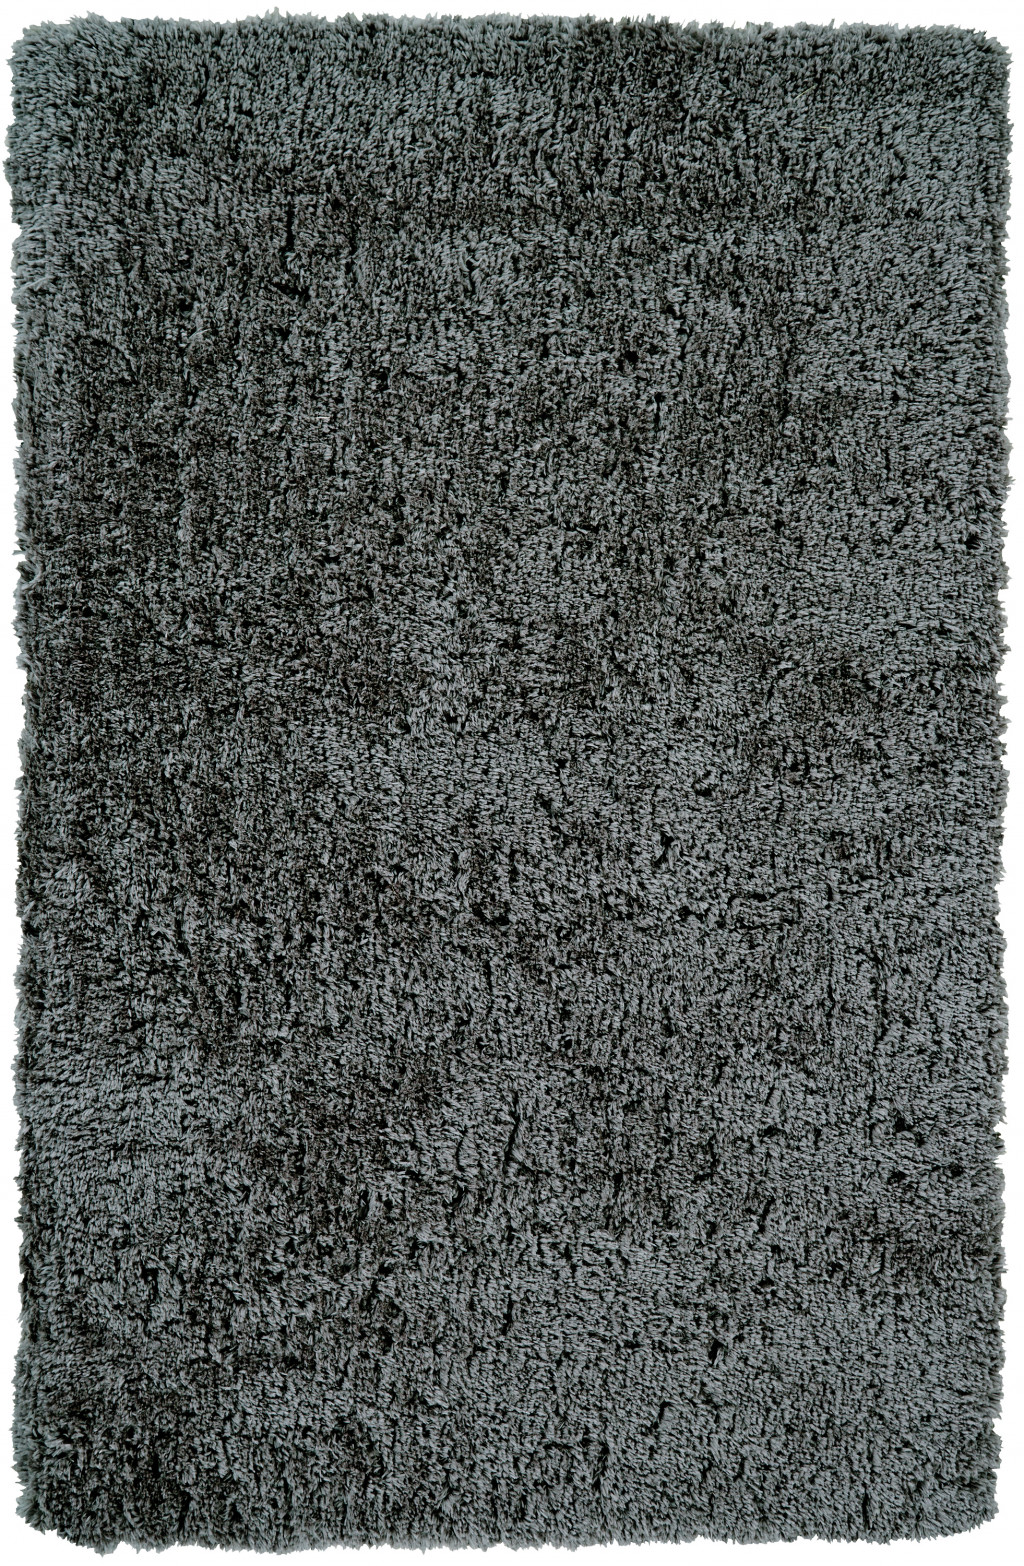 5' X 8' Gray Shag Tufted Handmade Stain Resistant Area Rug-511124-1